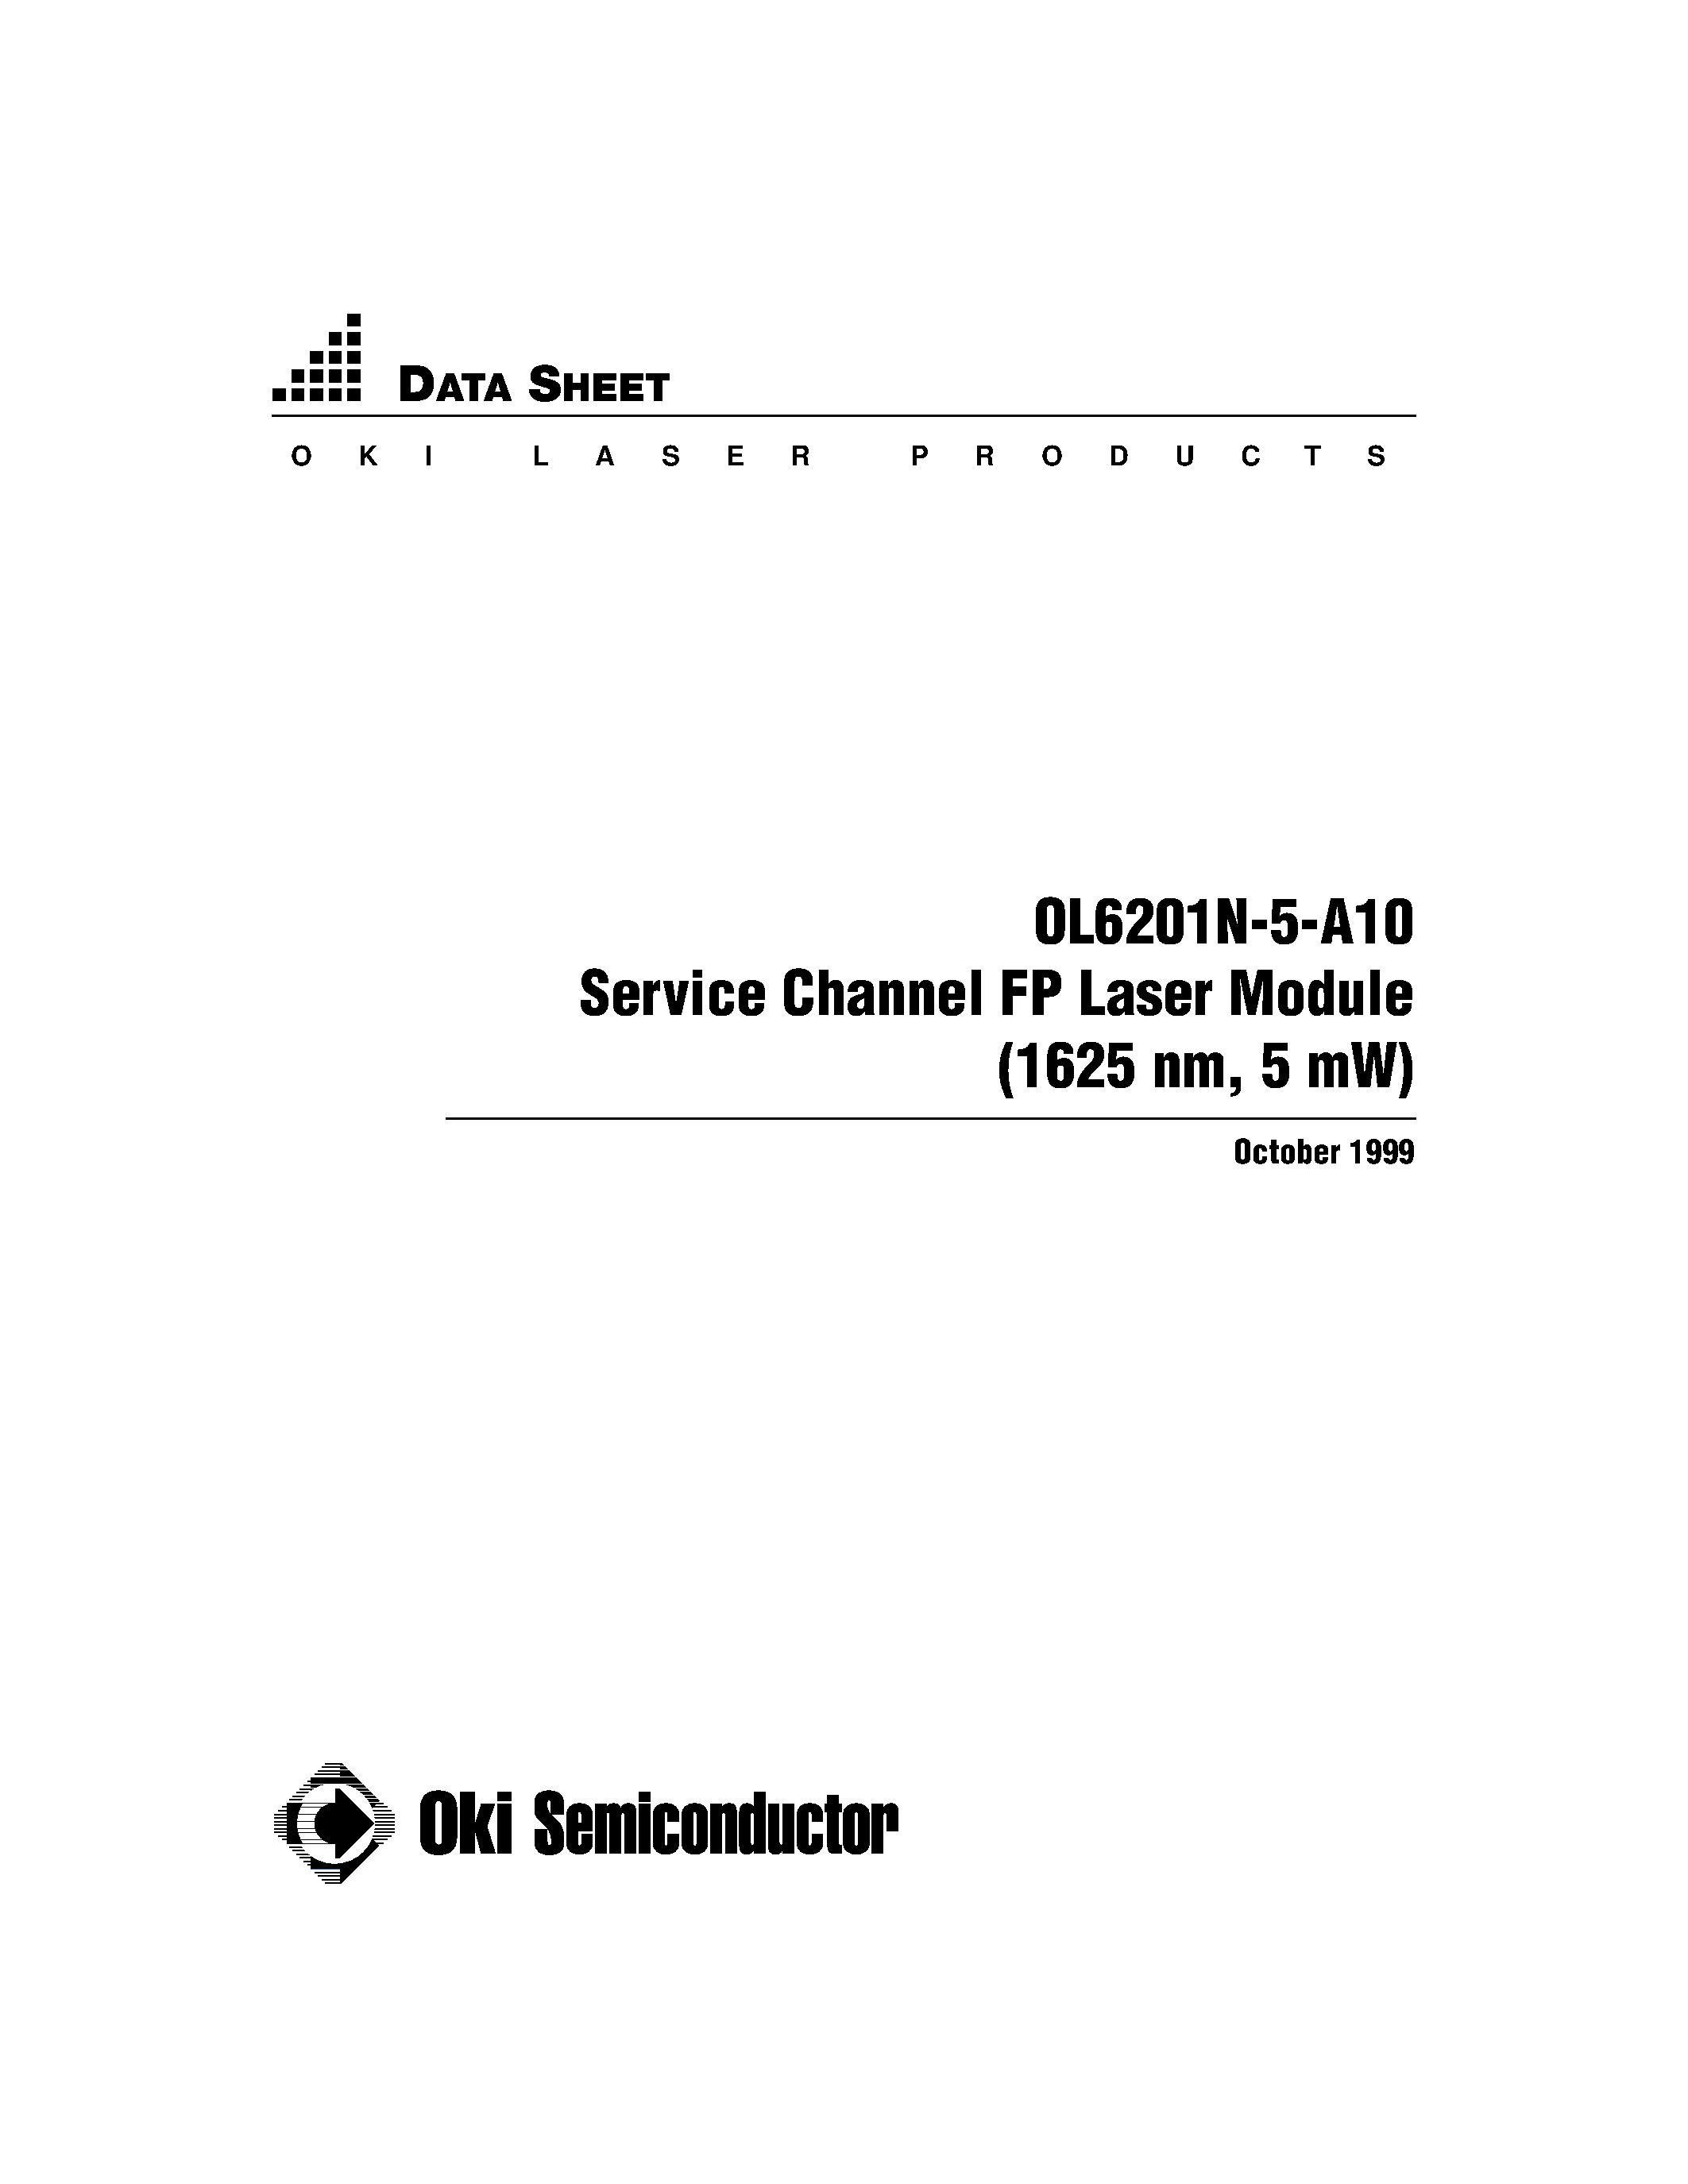 Datasheet OL6201N-5-A10 - Service Channel FP Laser Module (1625 nm / 5 mW) page 1